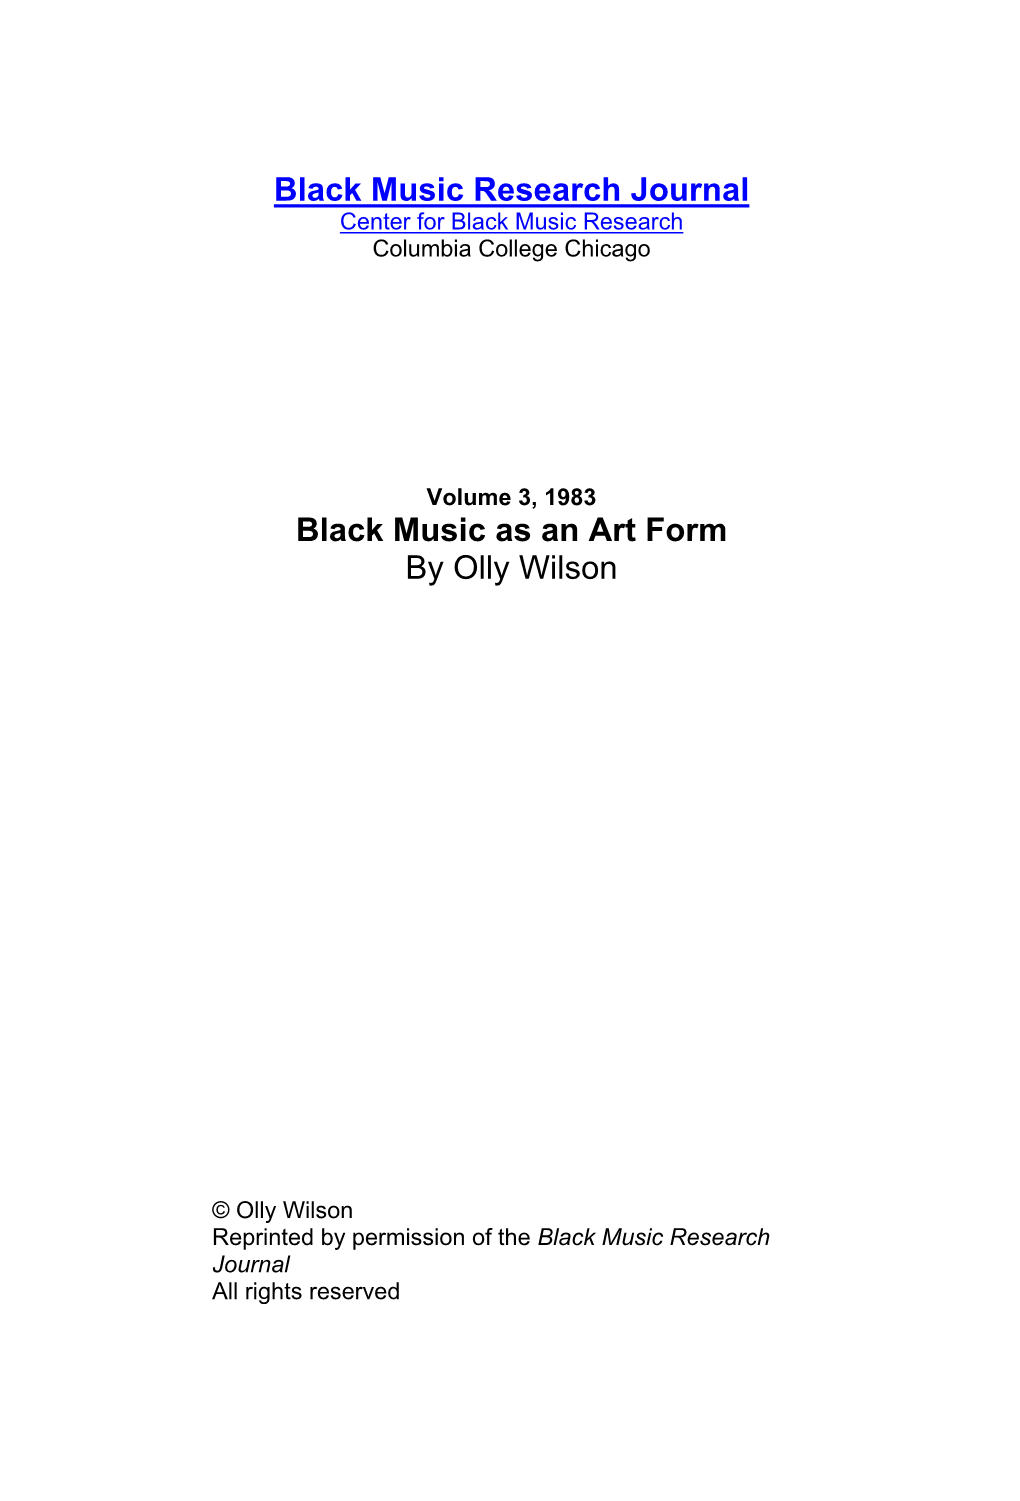 Black Music As an Art Form by Olly Wilson